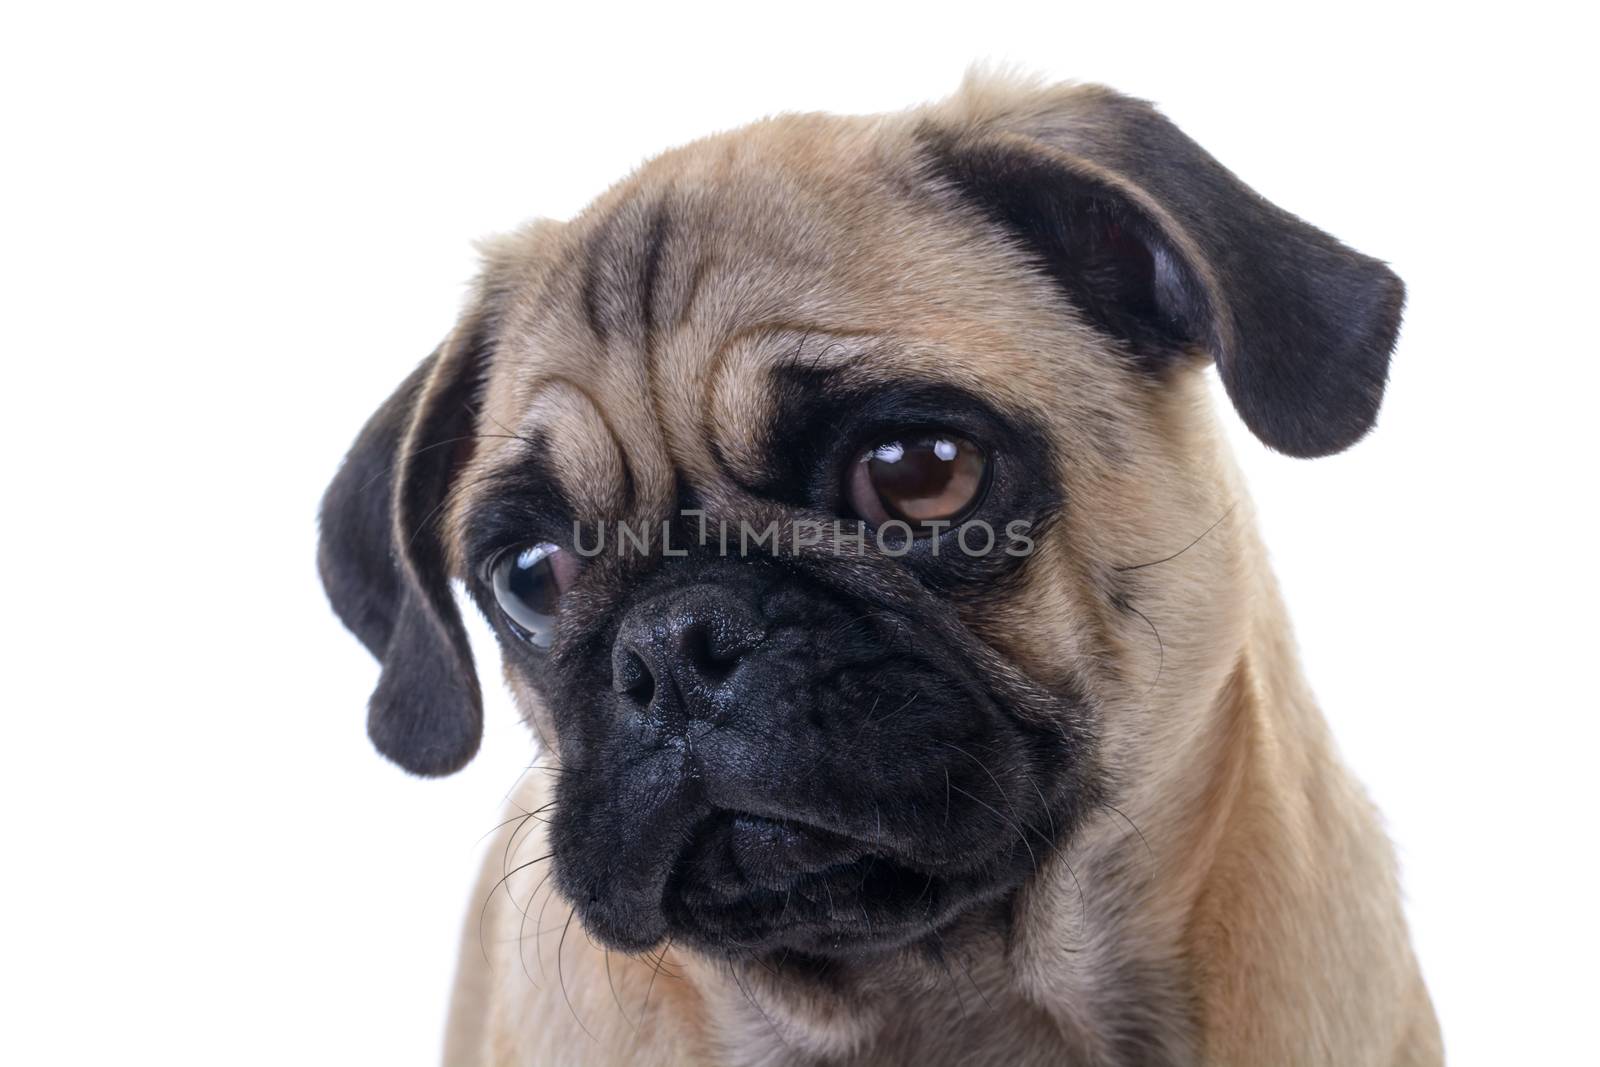 Adorable Pug Dog over white background, Head closeup, Horizontal shot